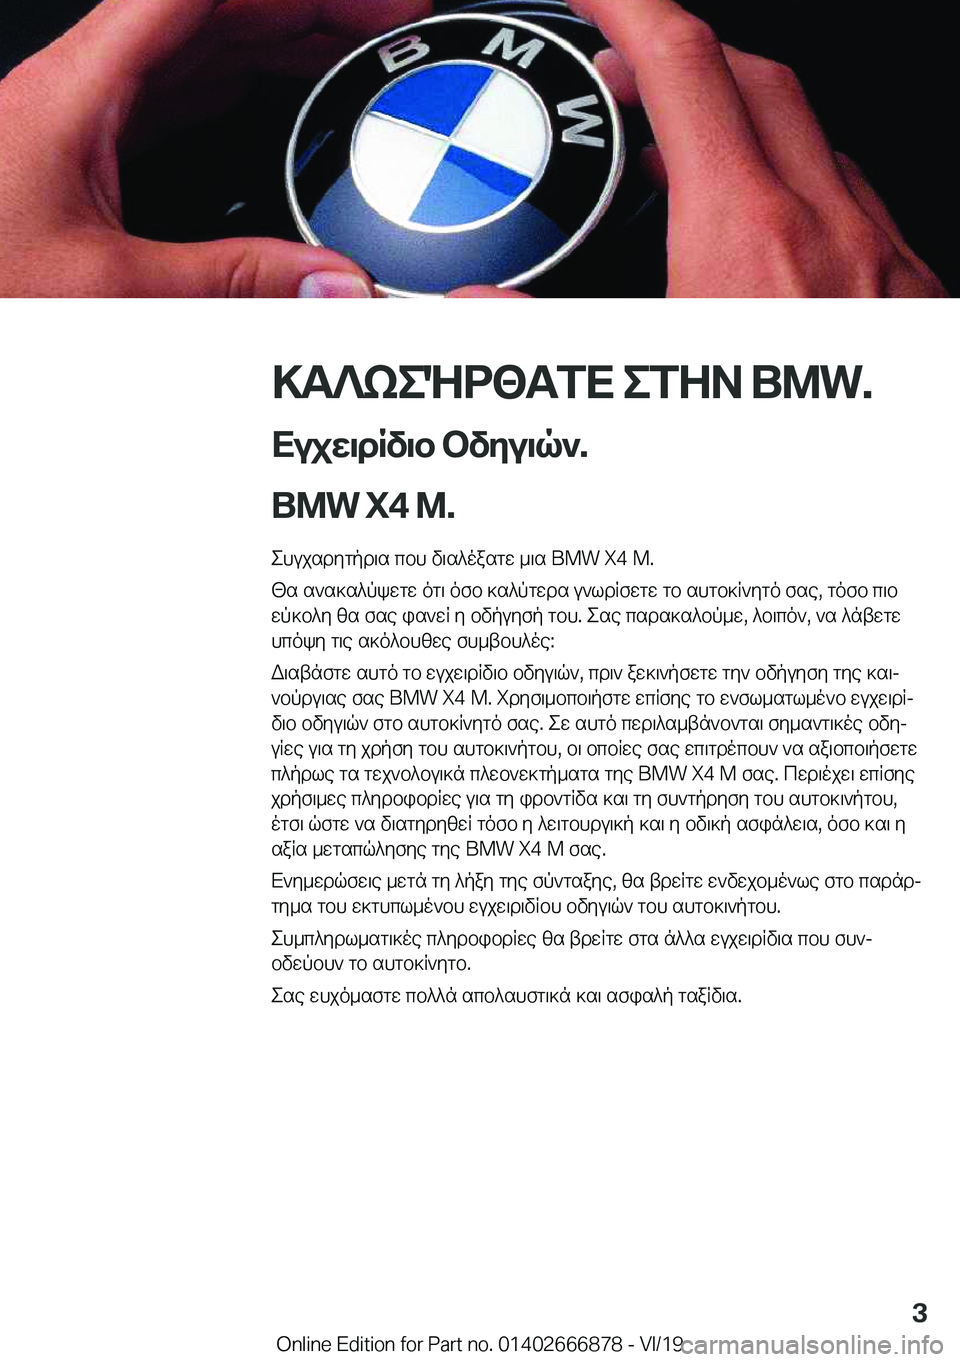 BMW X4 M 2020  ΟΔΗΓΌΣ ΧΡΉΣΗΣ (in Greek) >T?keNd<TfX�efZA��B�M�W�.
Xujw\dRv\b�bvyu\q`�.
�B�M�W��X�4��M�. ehujsdygpd\s�cbh�v\s^oasgw�_\s��B�M�W��X�4��M�.
<s�s`s]s^